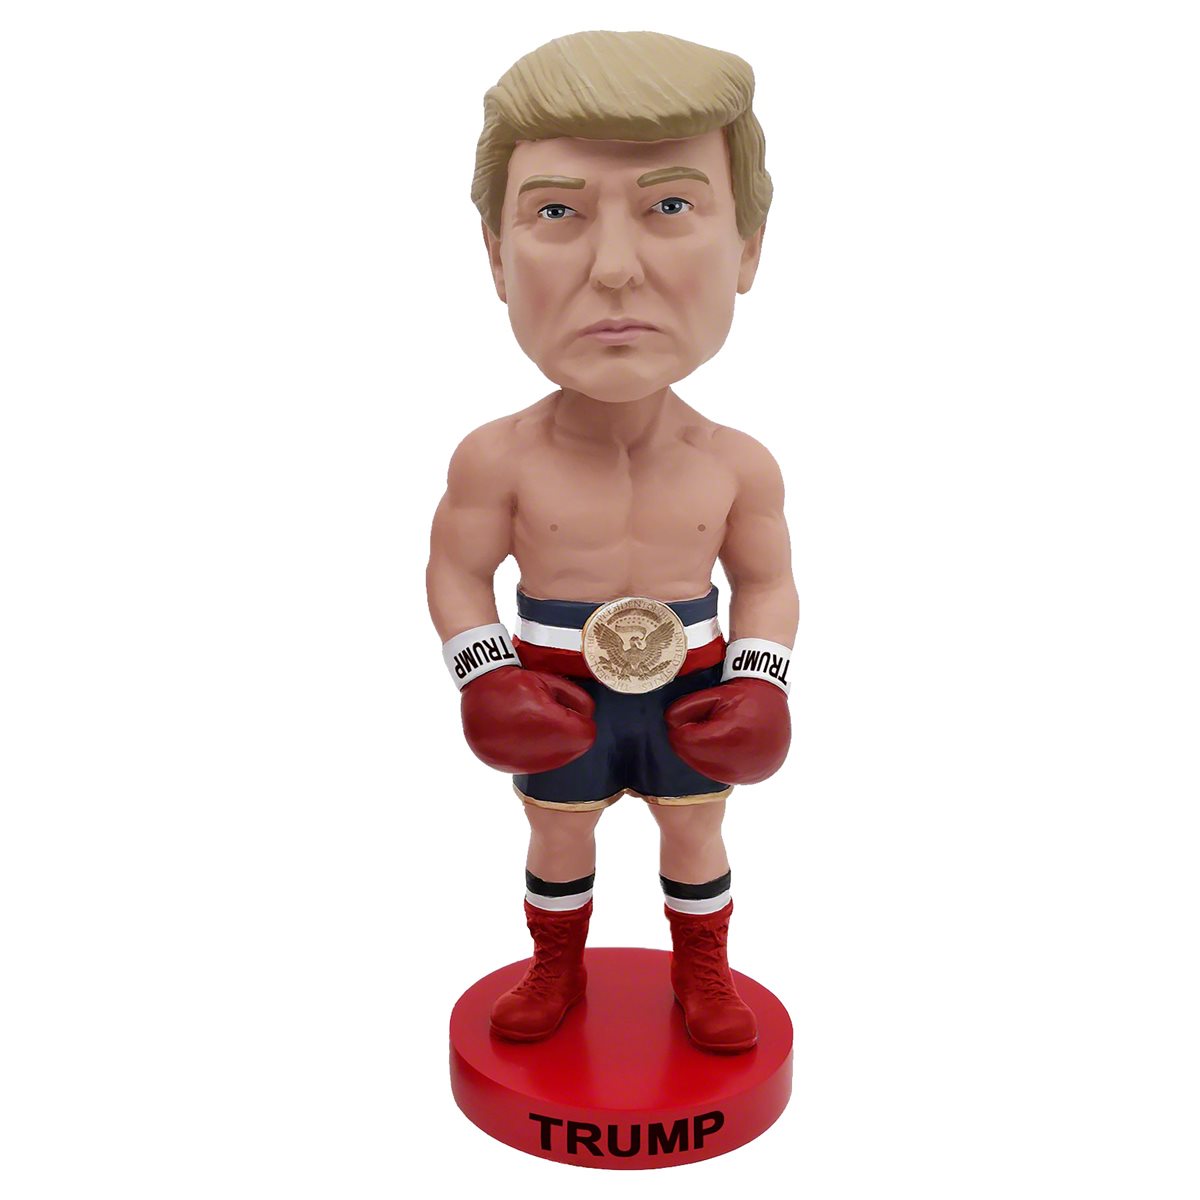 President Donald Trump Boxer Election 2020 Bobble Head Wackelkopf Figur 